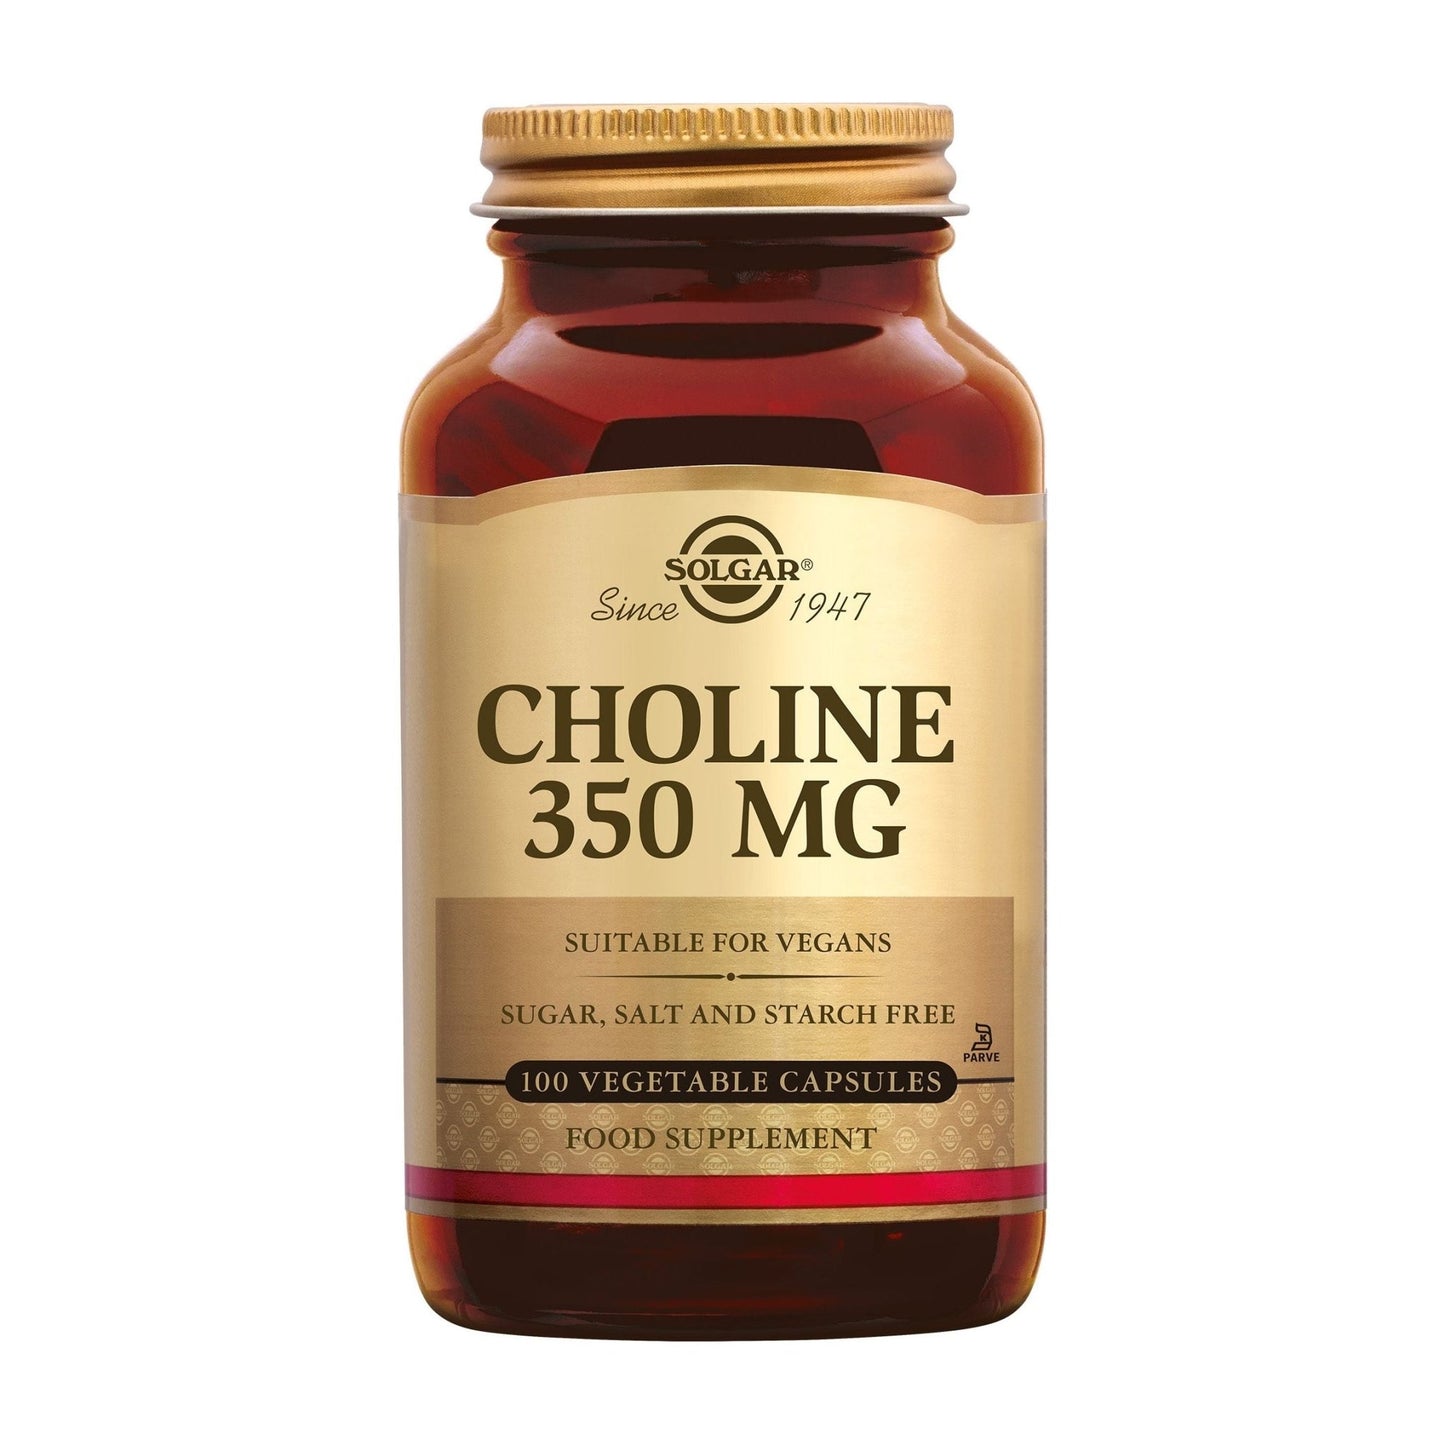 Choline 350 mg Supplement Solgar   